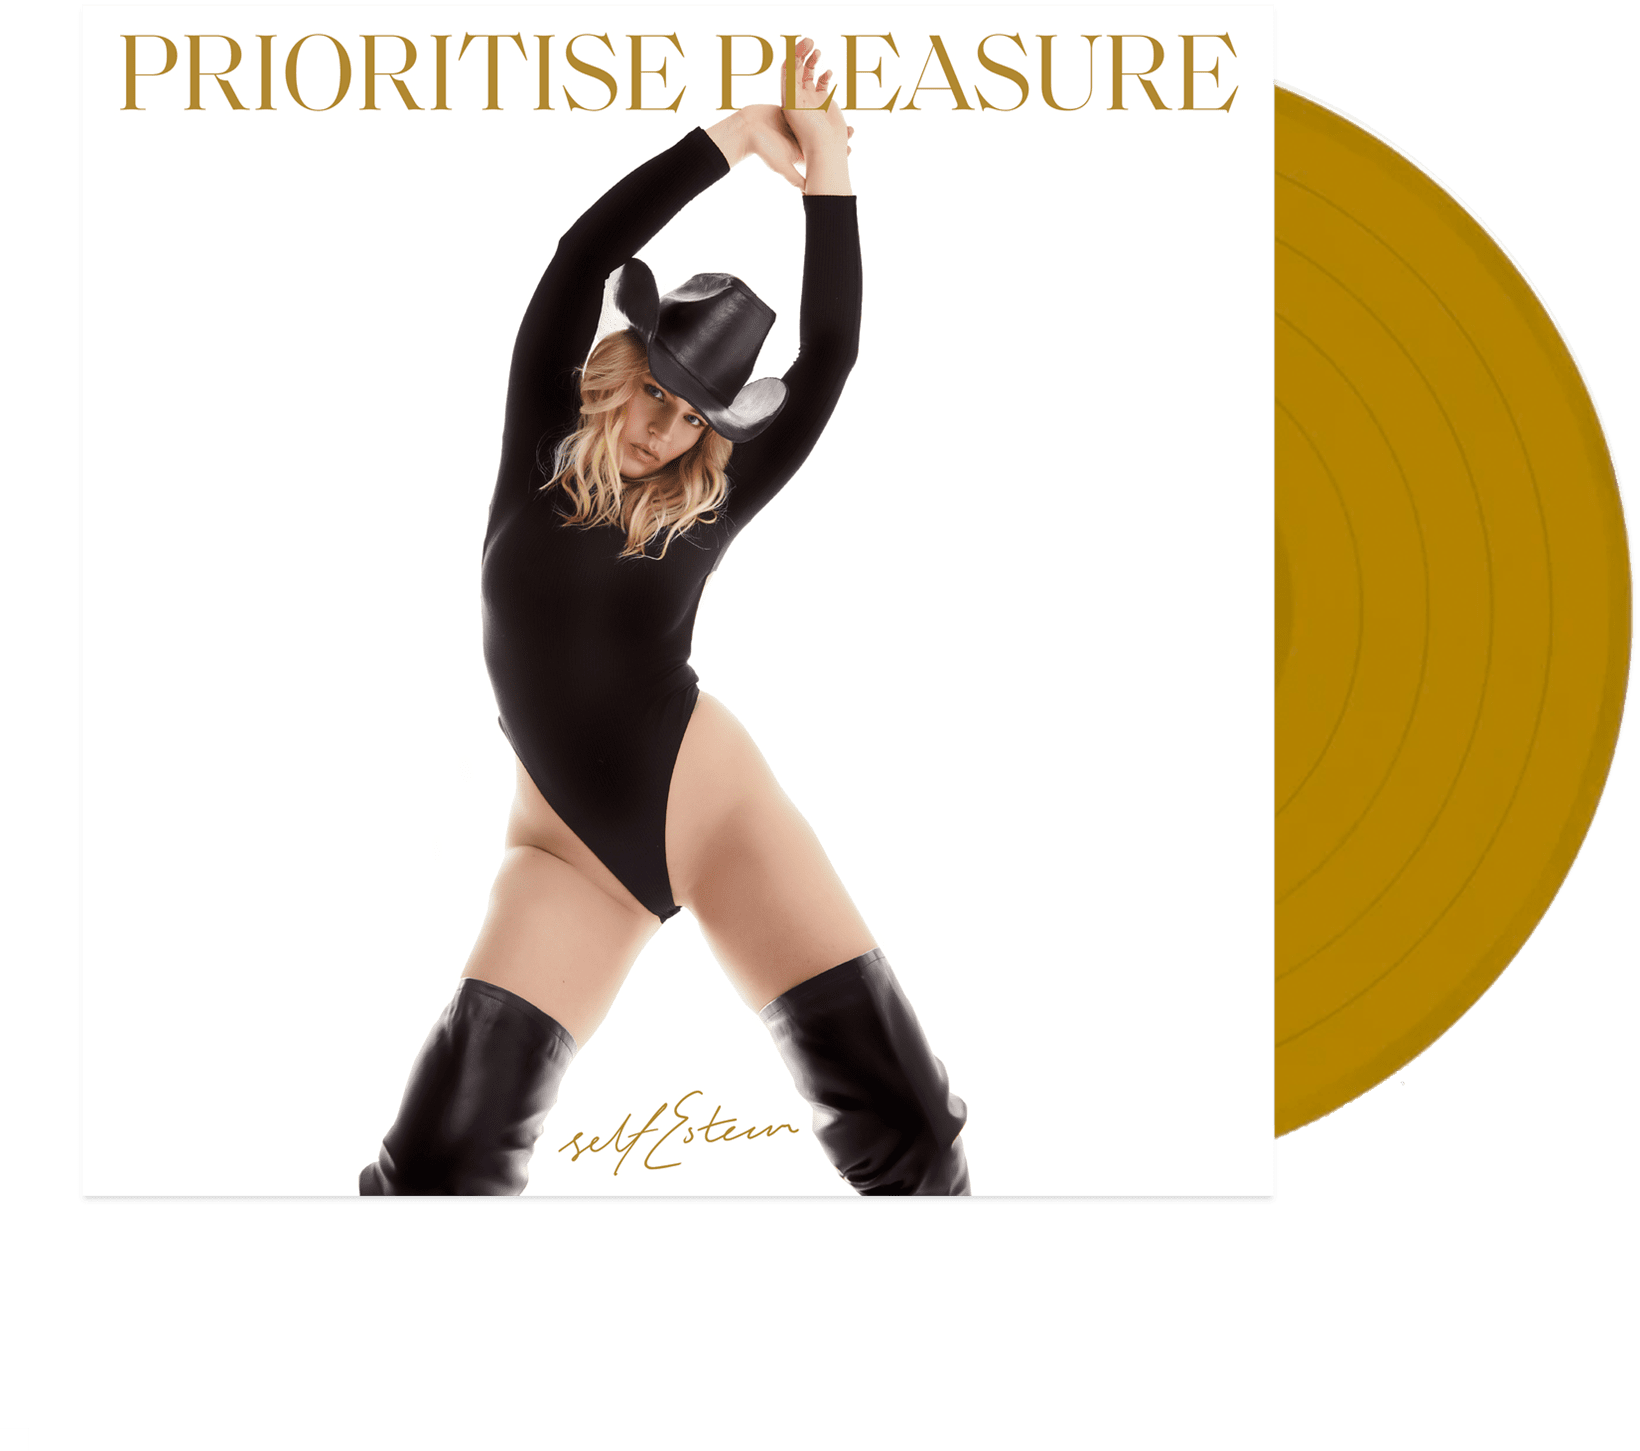 Prioritise Pleasure - Limited Edition Gold Vinyl